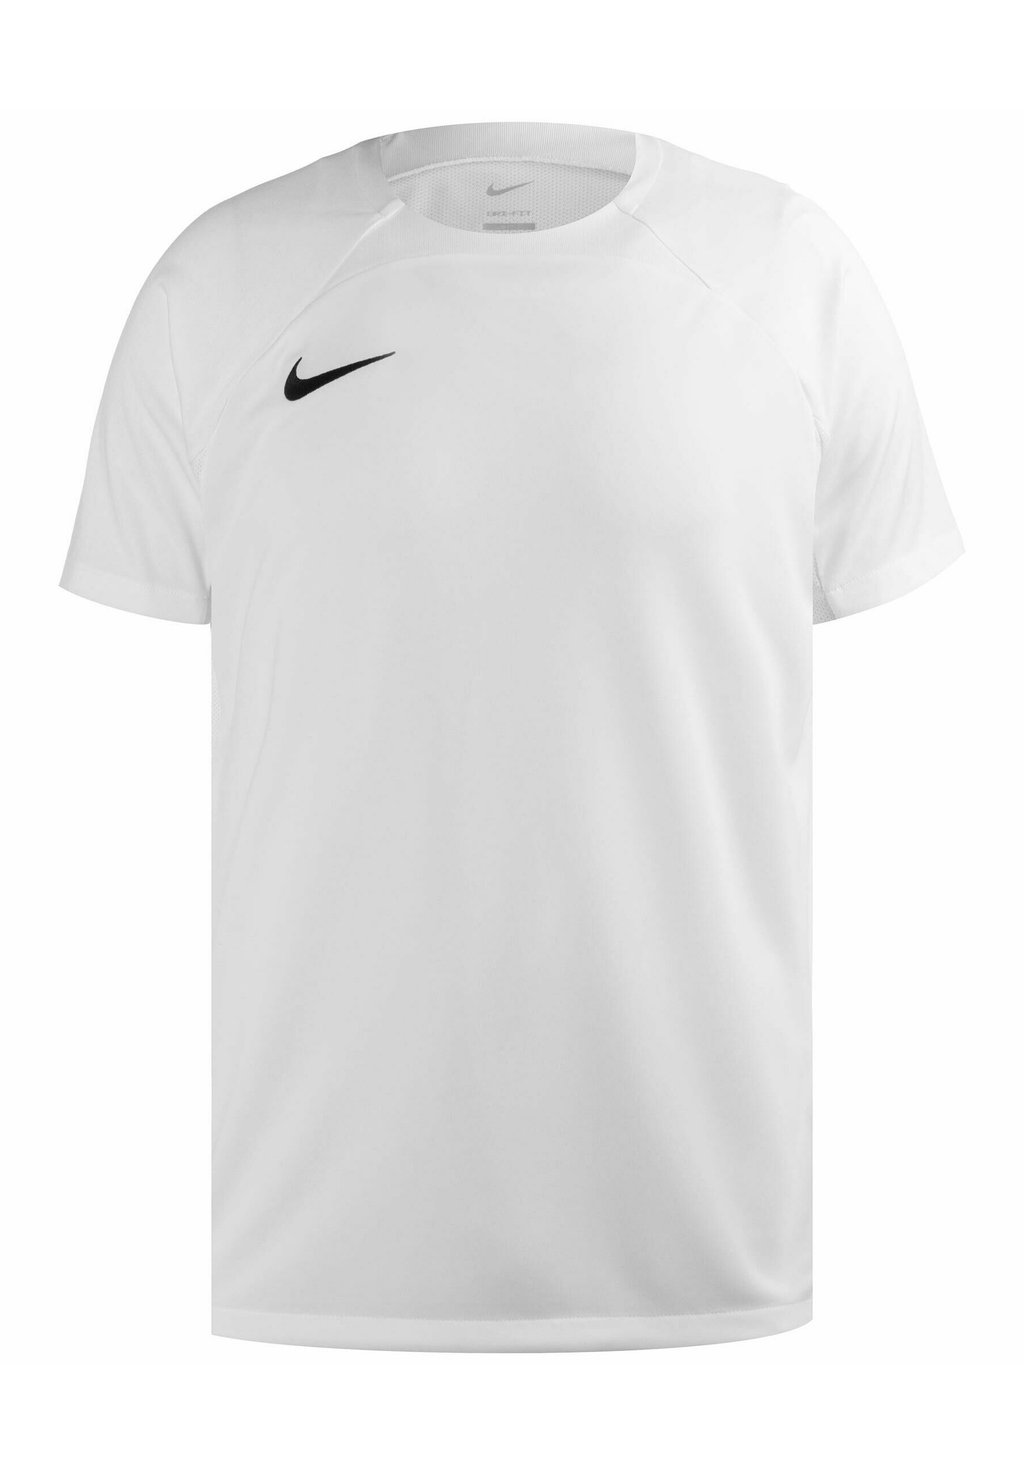 Спортивная футболка Strike Iii Fussball Nike, цвет white white white black